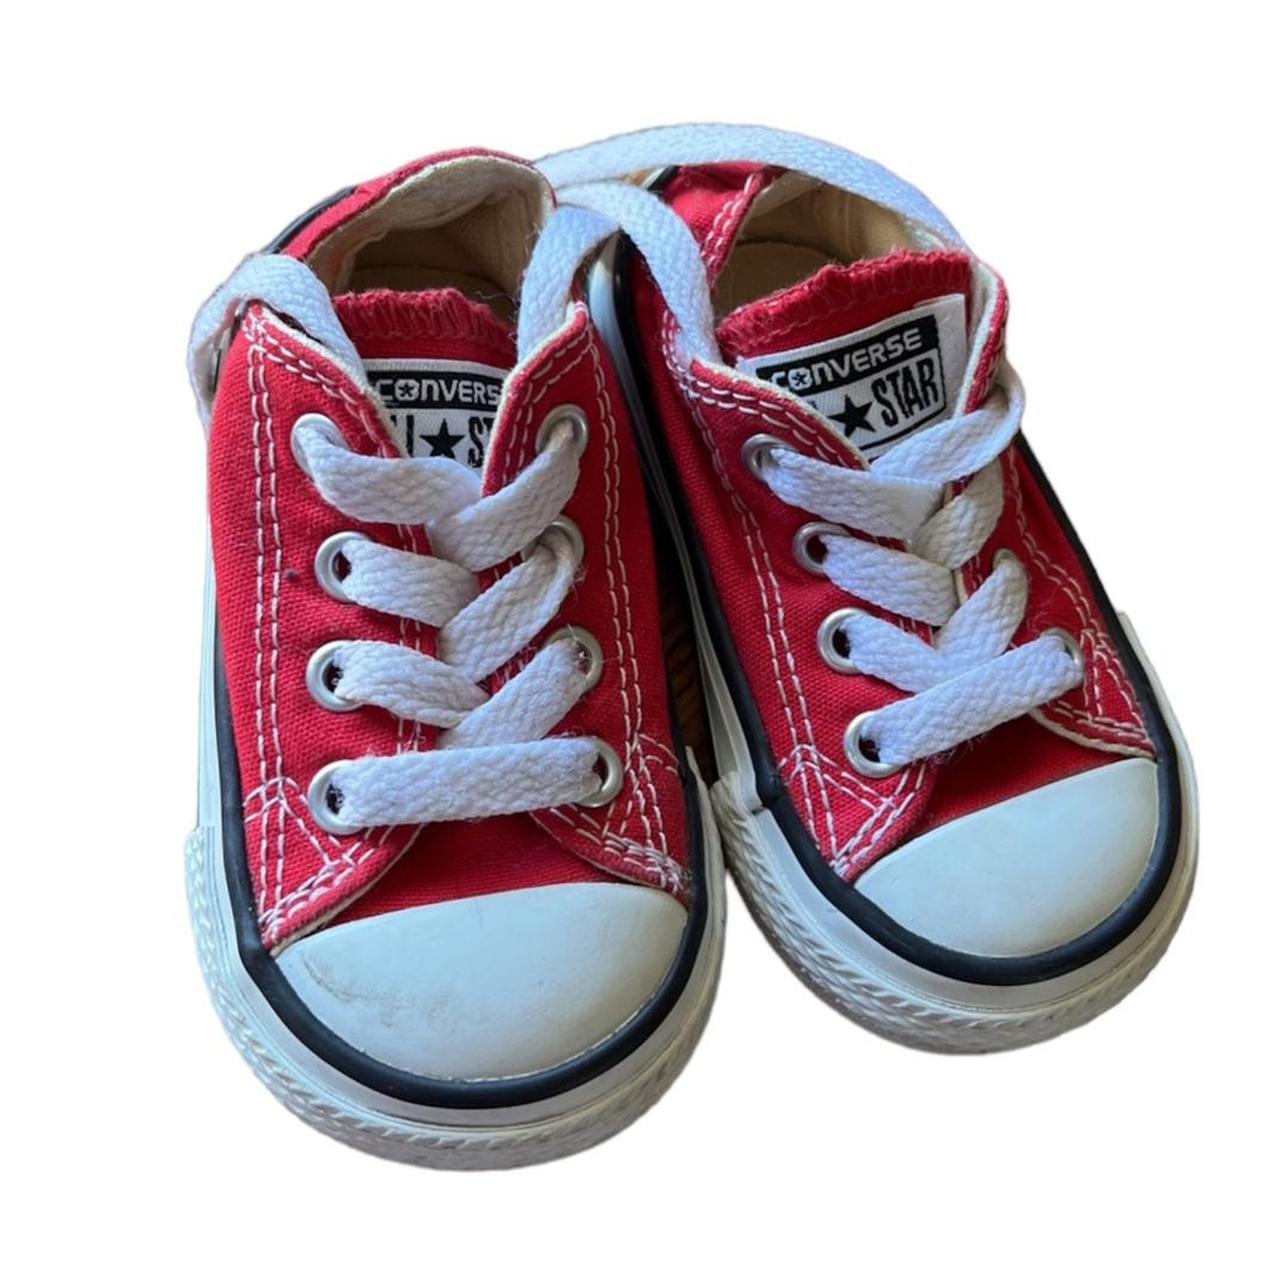 Red converse toddler size 3 Minimal wear - Depop